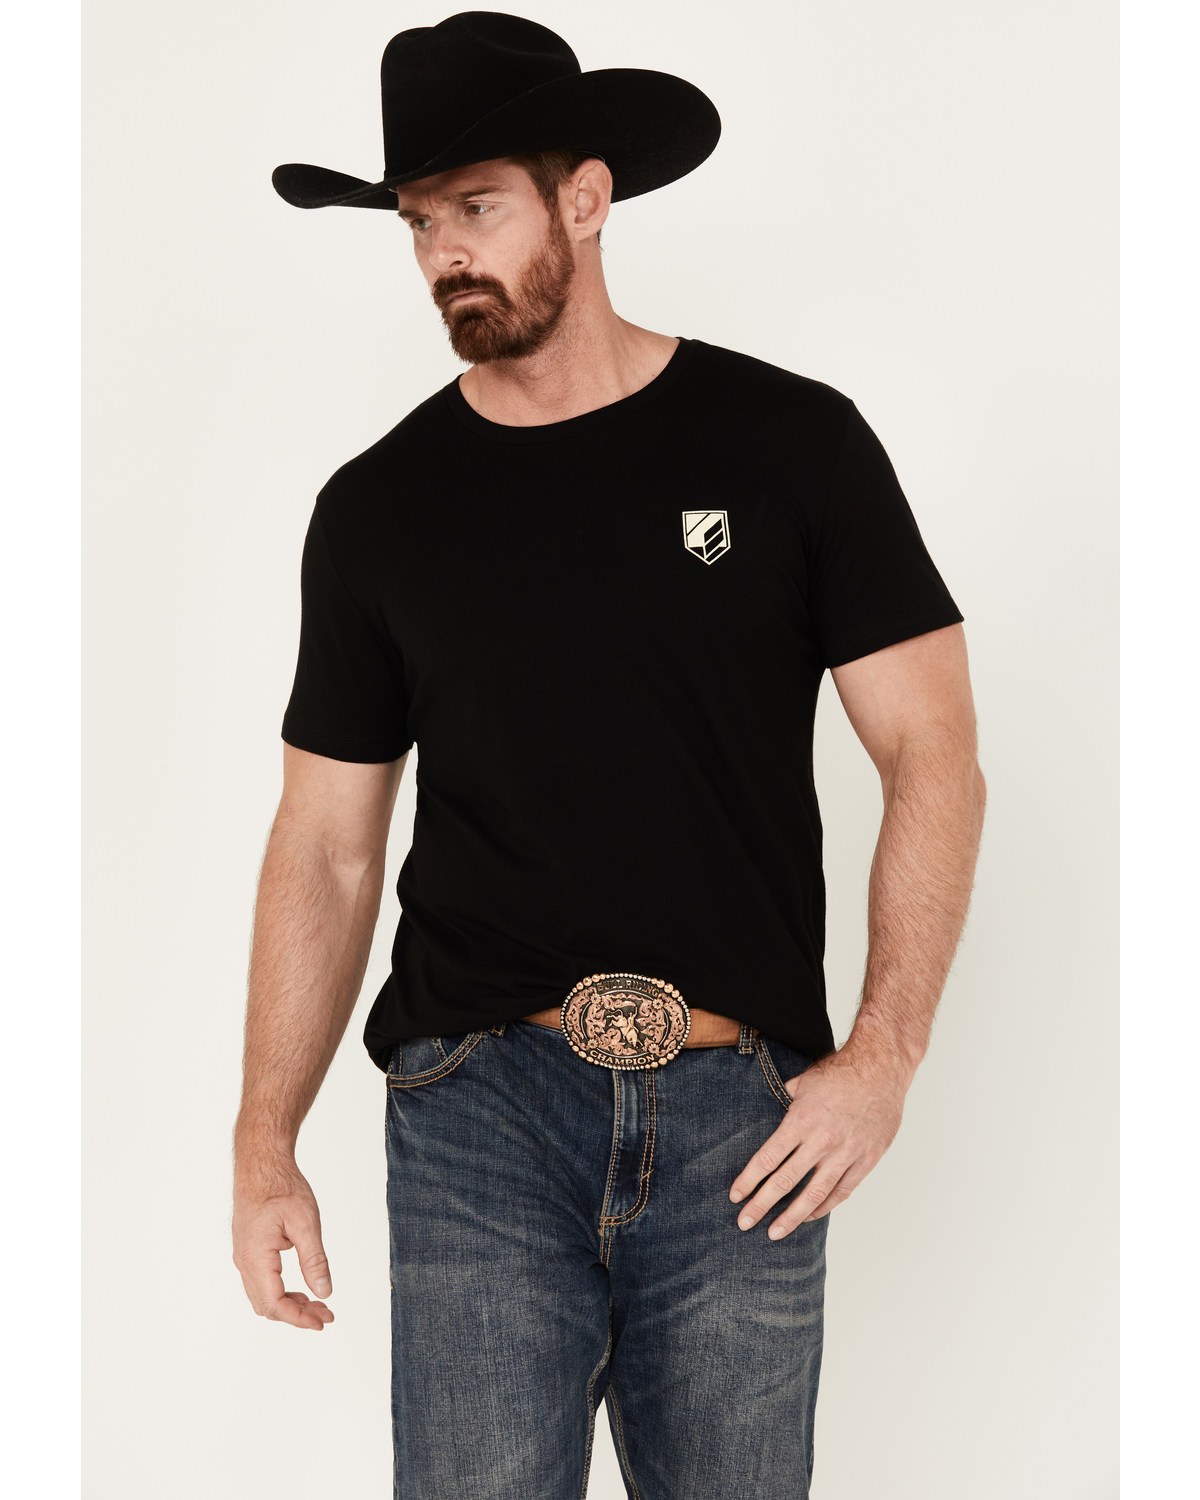 RANK 45® Men's Patriot Short Sleeve Graphic T-Shirt